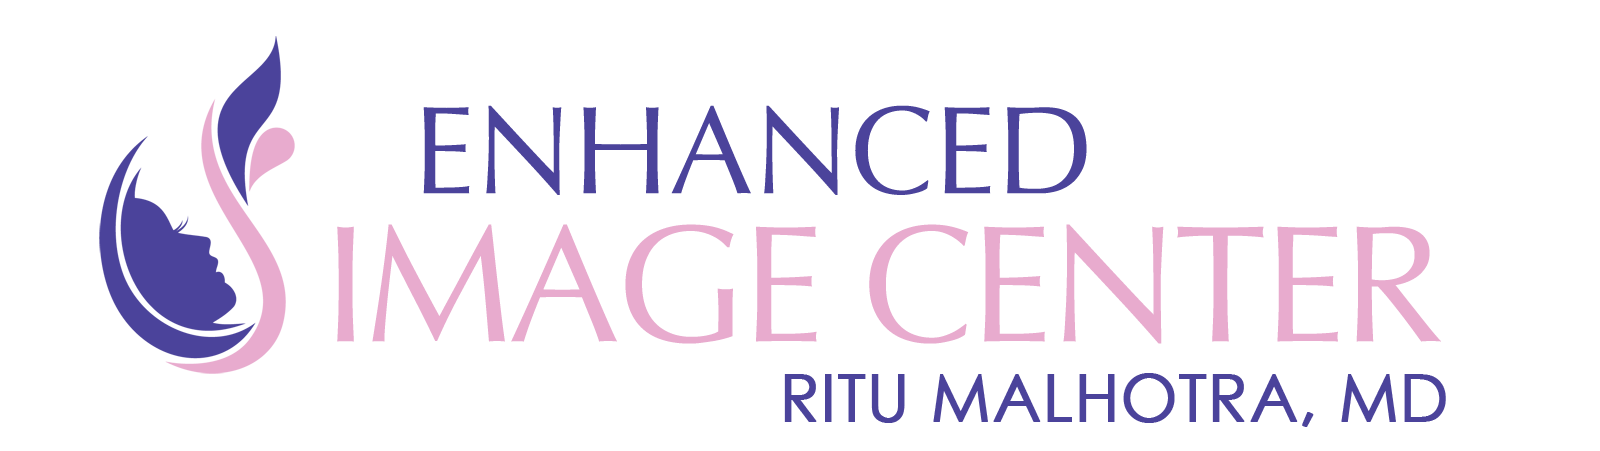 Enhanced Image Center Ritu Malhotra Md Akron Cleveland Mentor Oh Cosmetic Surgery Center